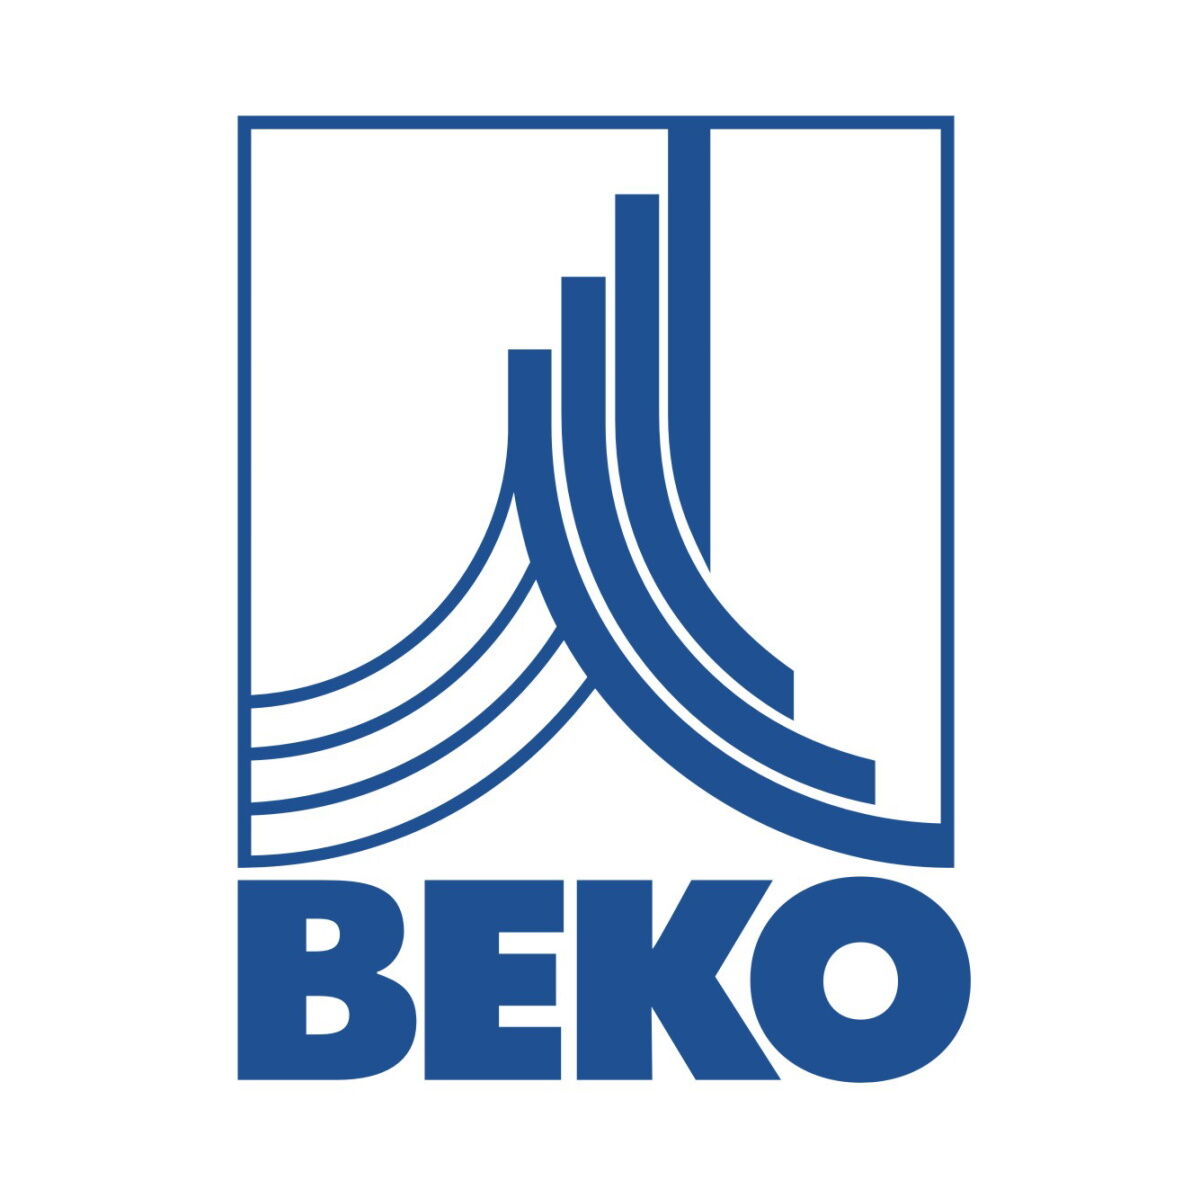 BEKO Heizstab für ÖWAMAT 8, 200/230 Vac, 2x1,4 kW 4001808